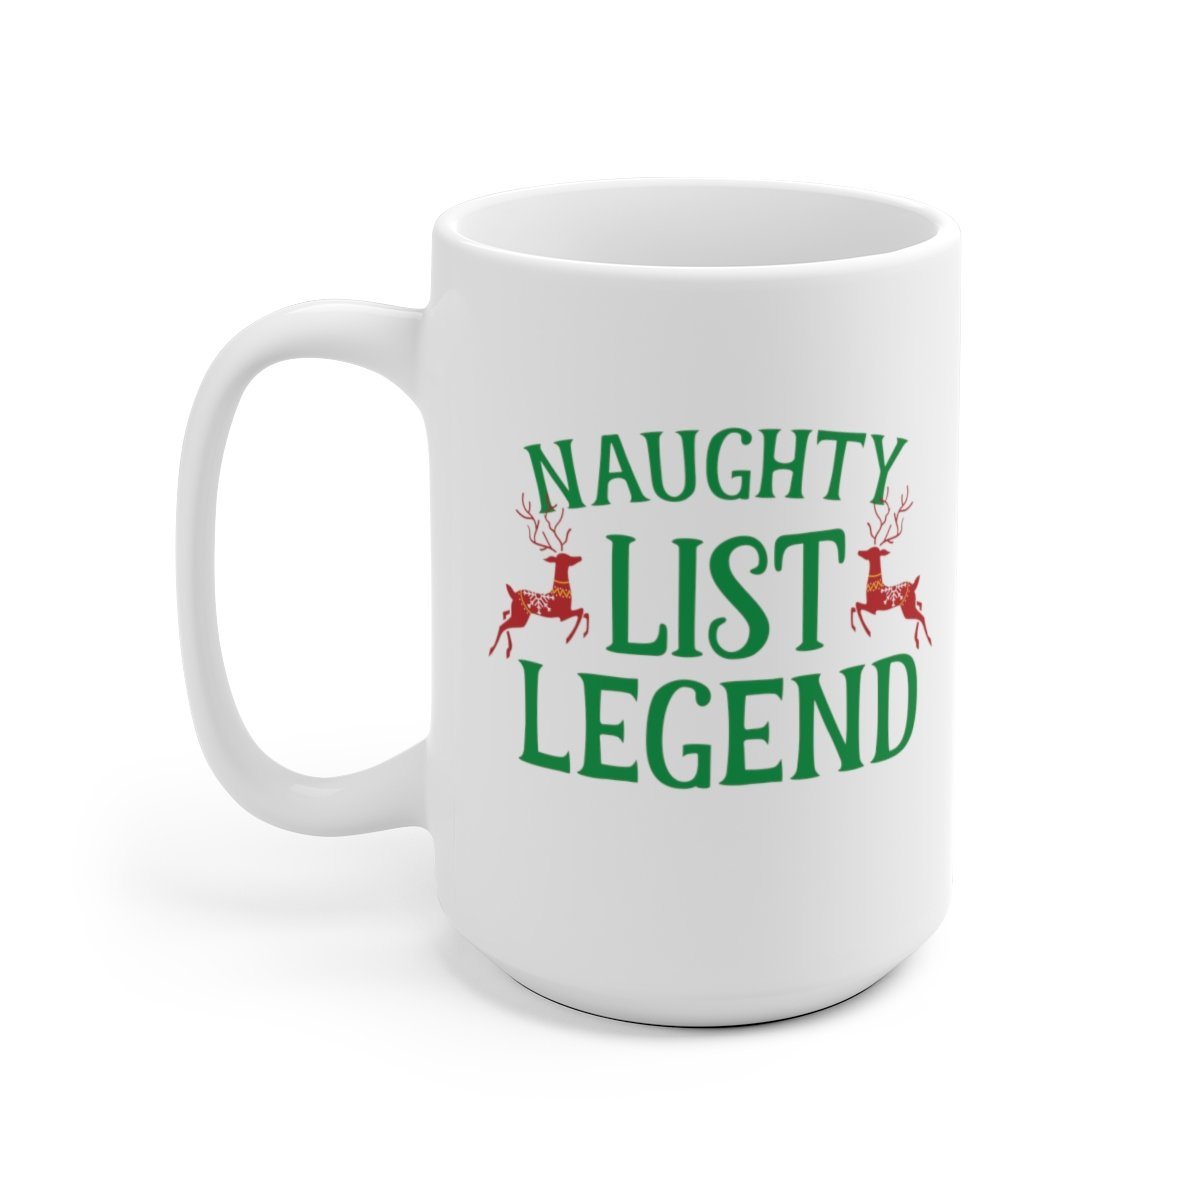 Naughty List Legend Holiday Novelty Mug